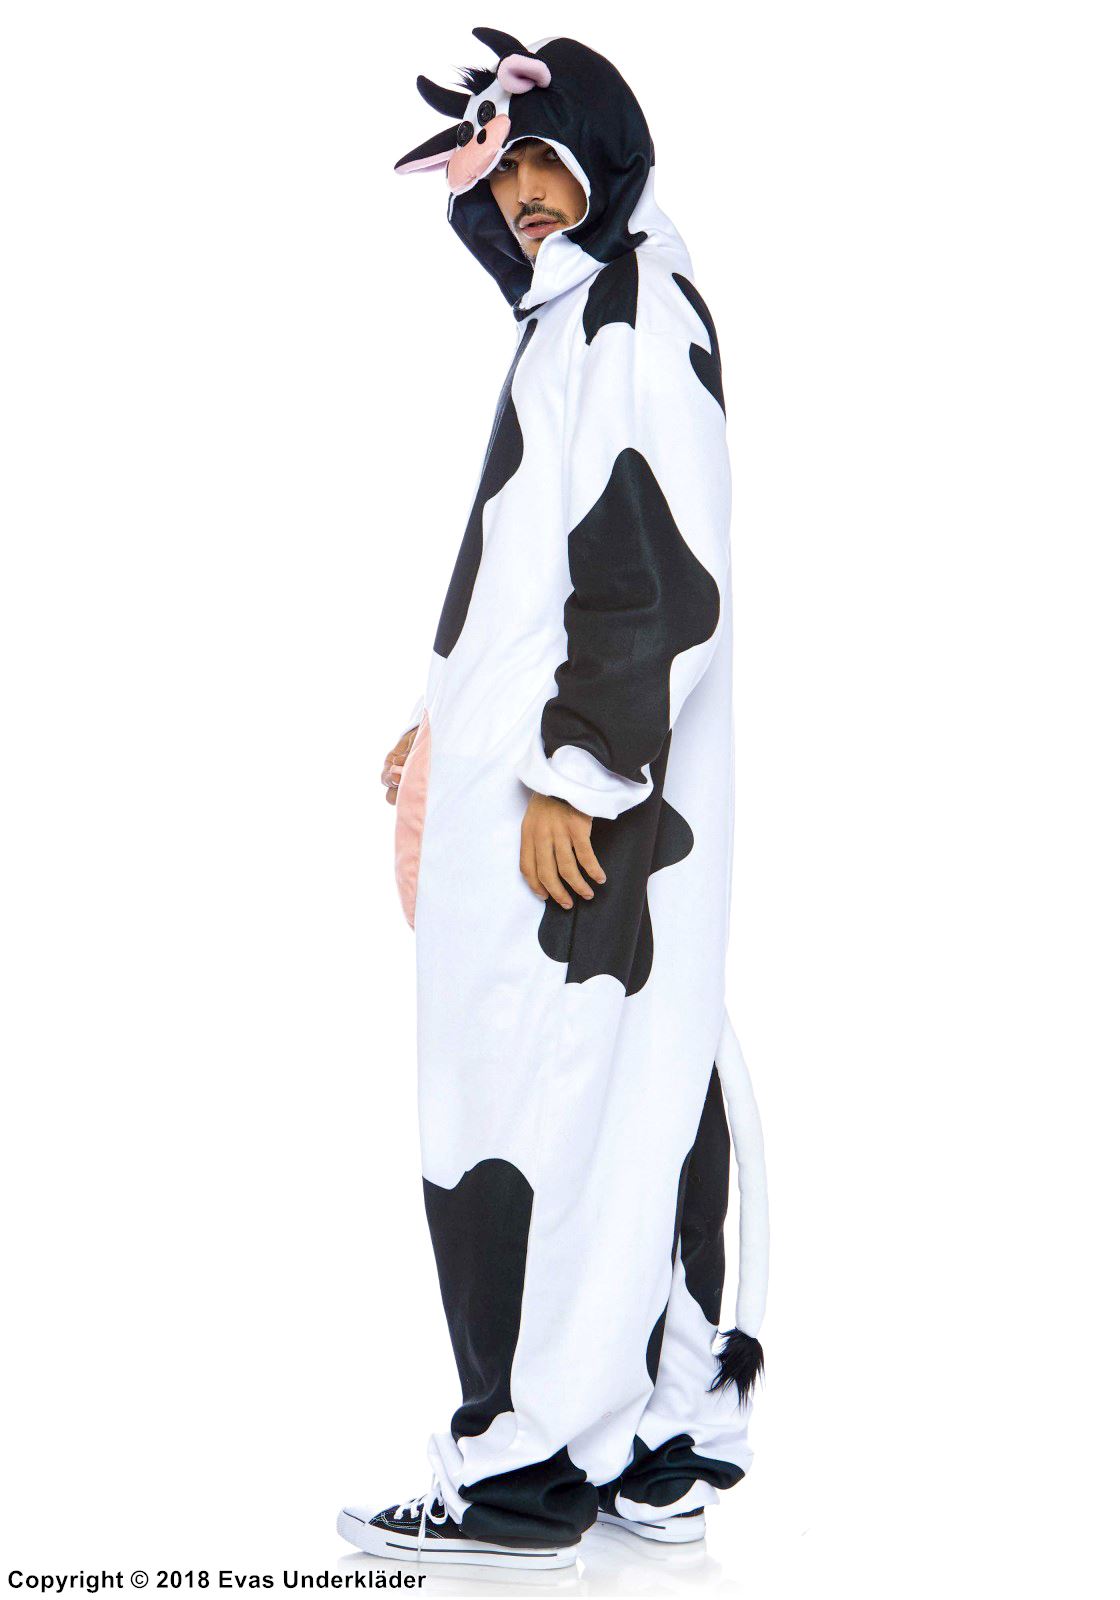 Cow, costume kigurumi jumpsuit, hood, front zipper